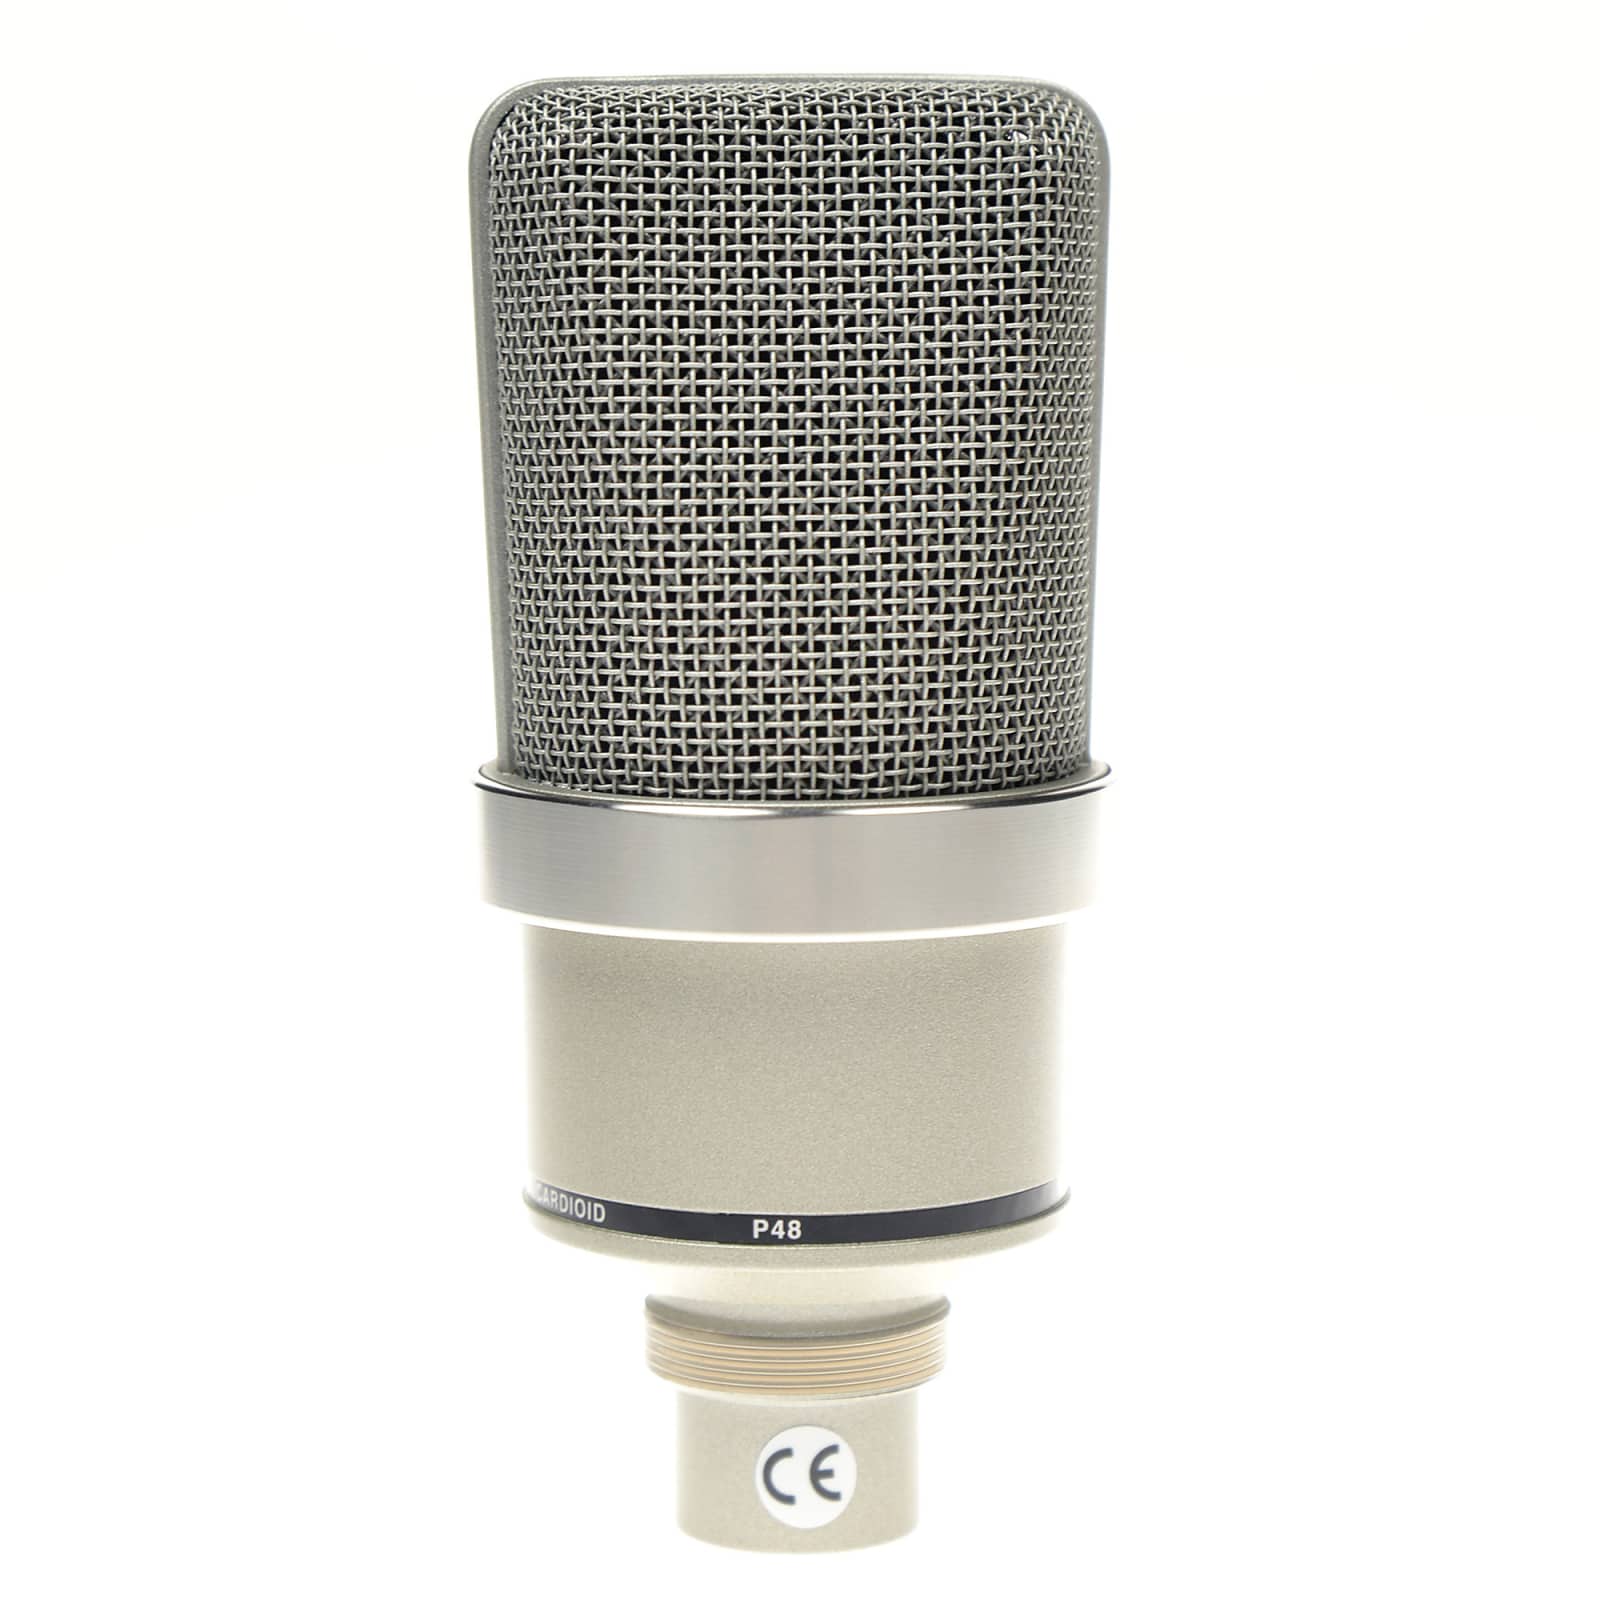 Neumann TLM102 Microphone Pro Audio / Microphones